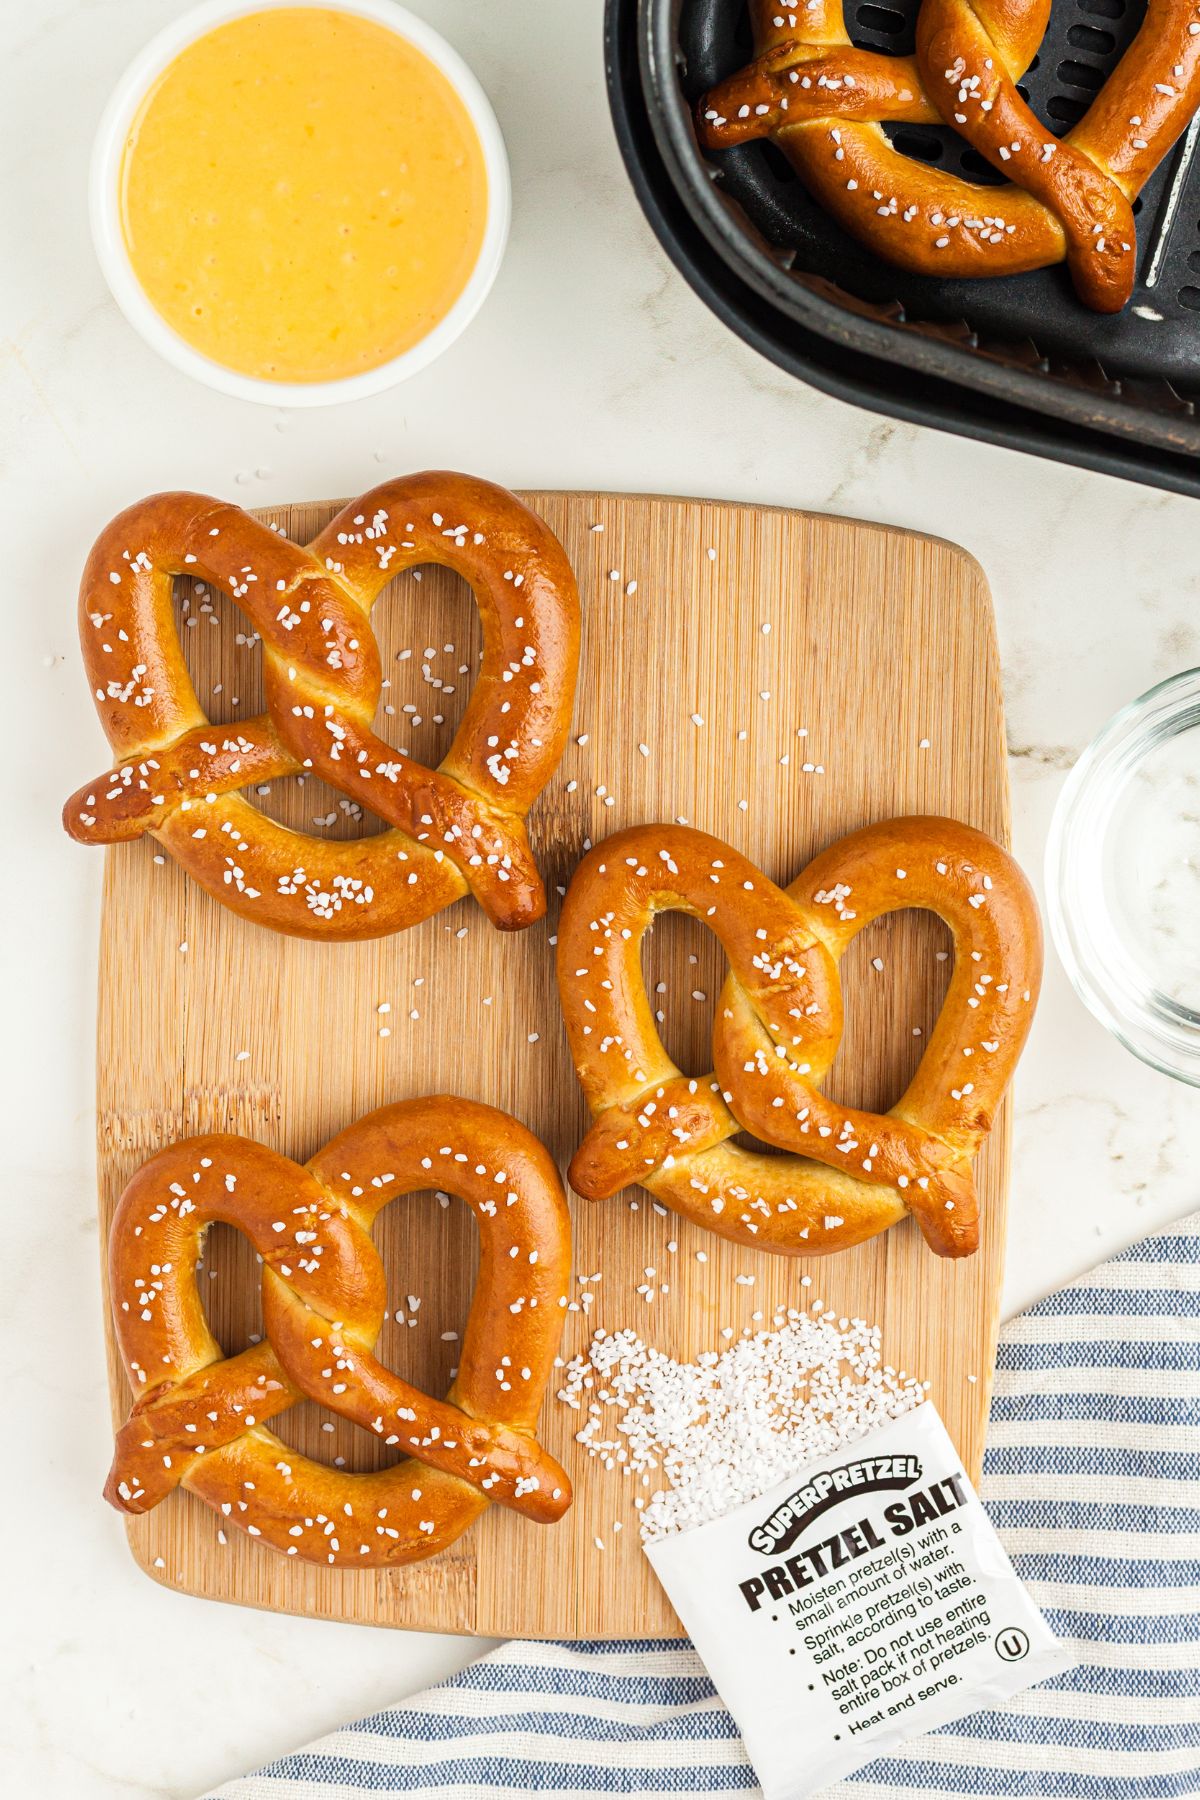 Golden frozen pretzels on a board sprinkled with salt before air frying